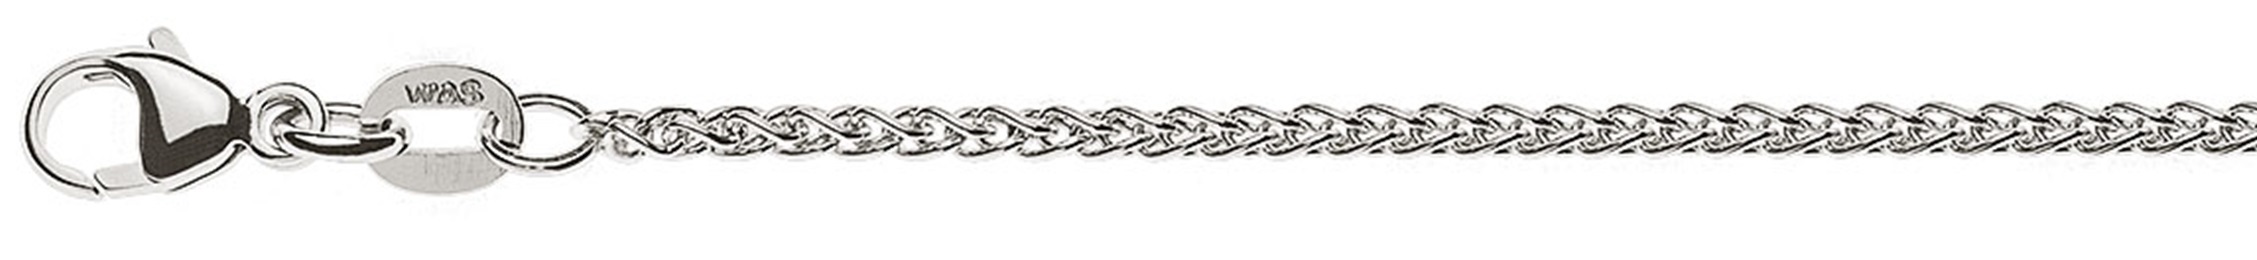 AURONOS Prestige Collier or blanc 18K chaîne câble 50cm 1.65mm